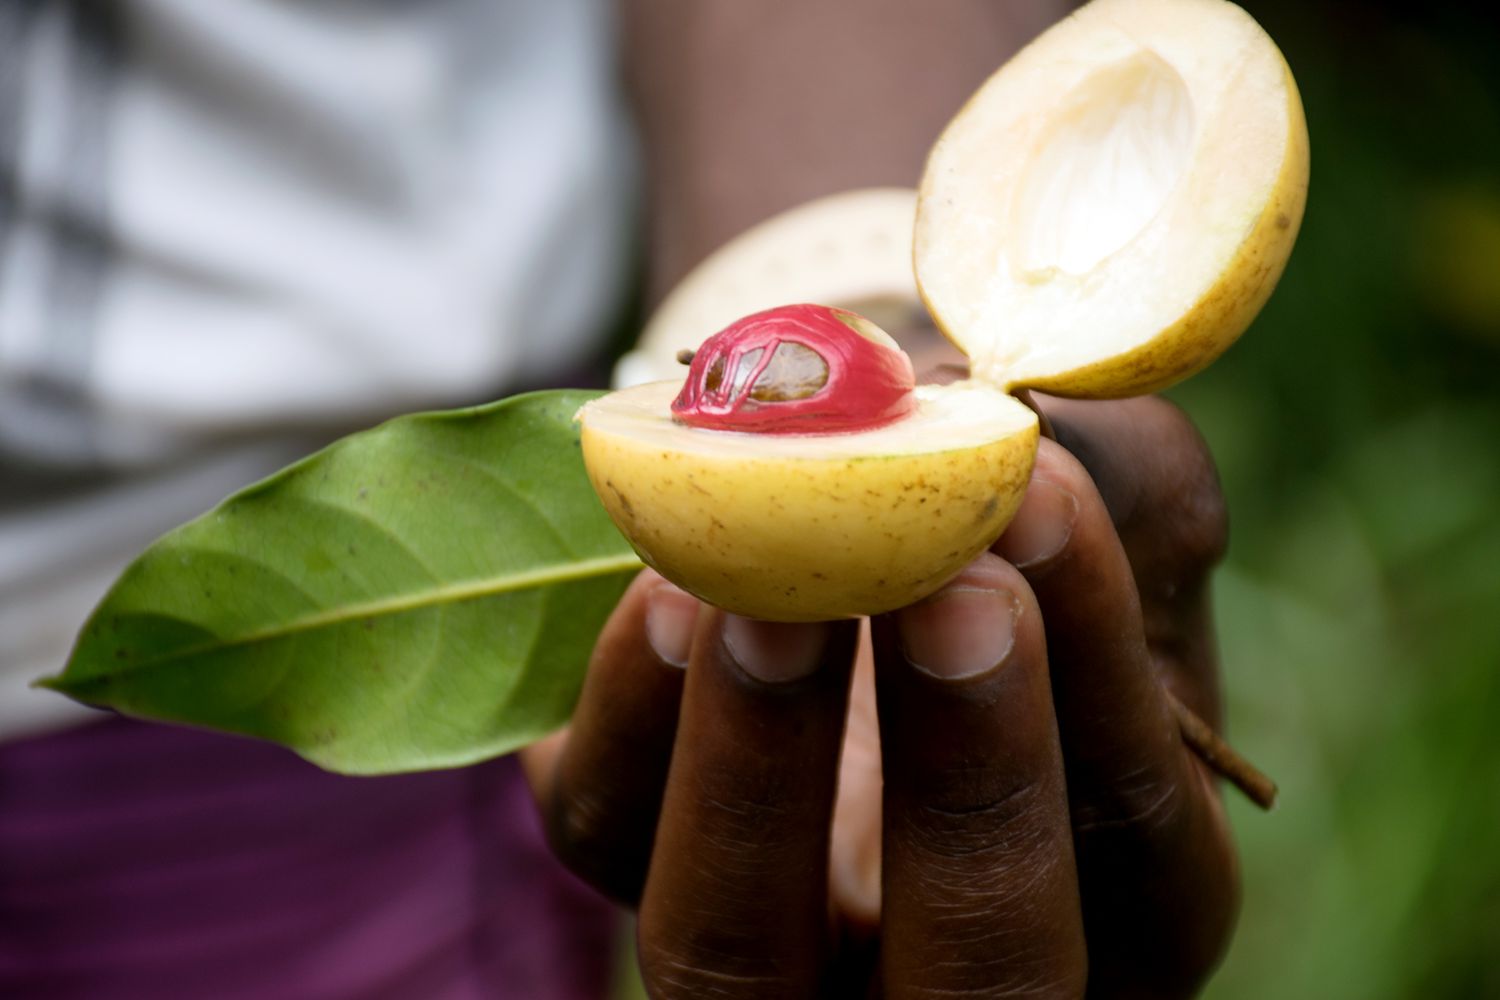 person holding fresh nutmeg fruit cut in half revealing red inside